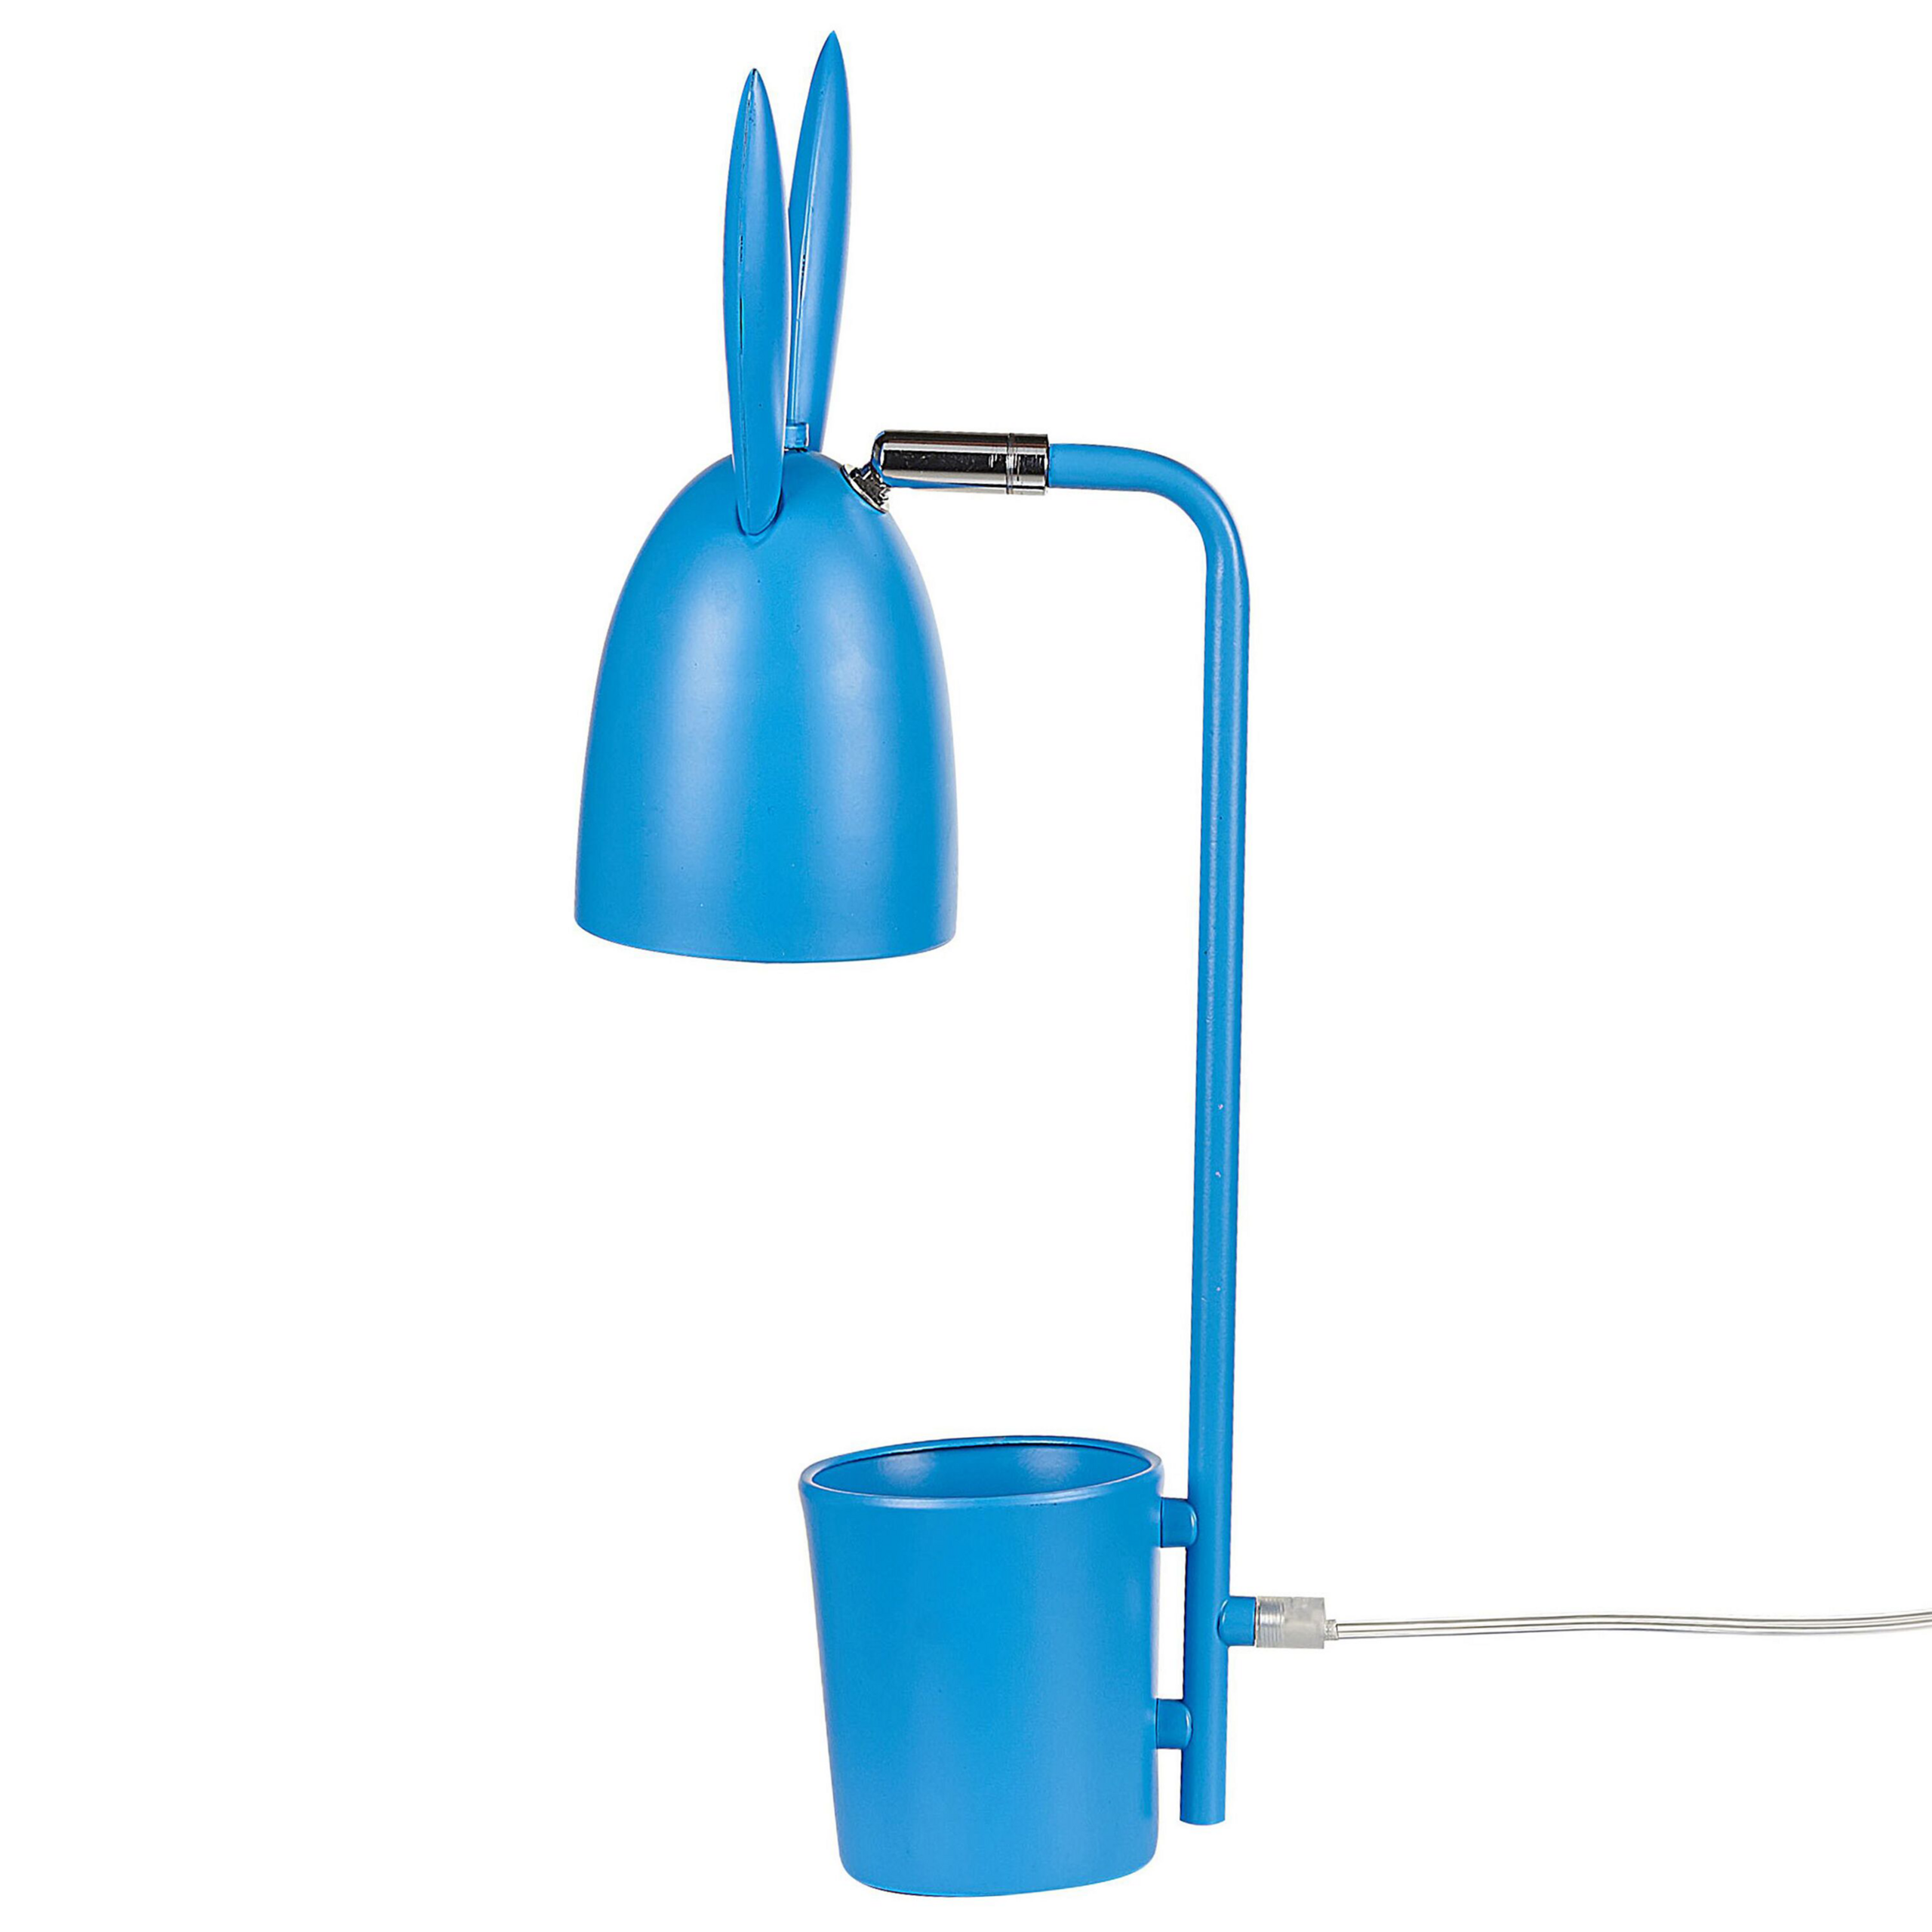 Beliani Desk Lamp Blue Metal Iron 42 cm Table Lamp Bunny Ears Shade Kids Room Modern Design